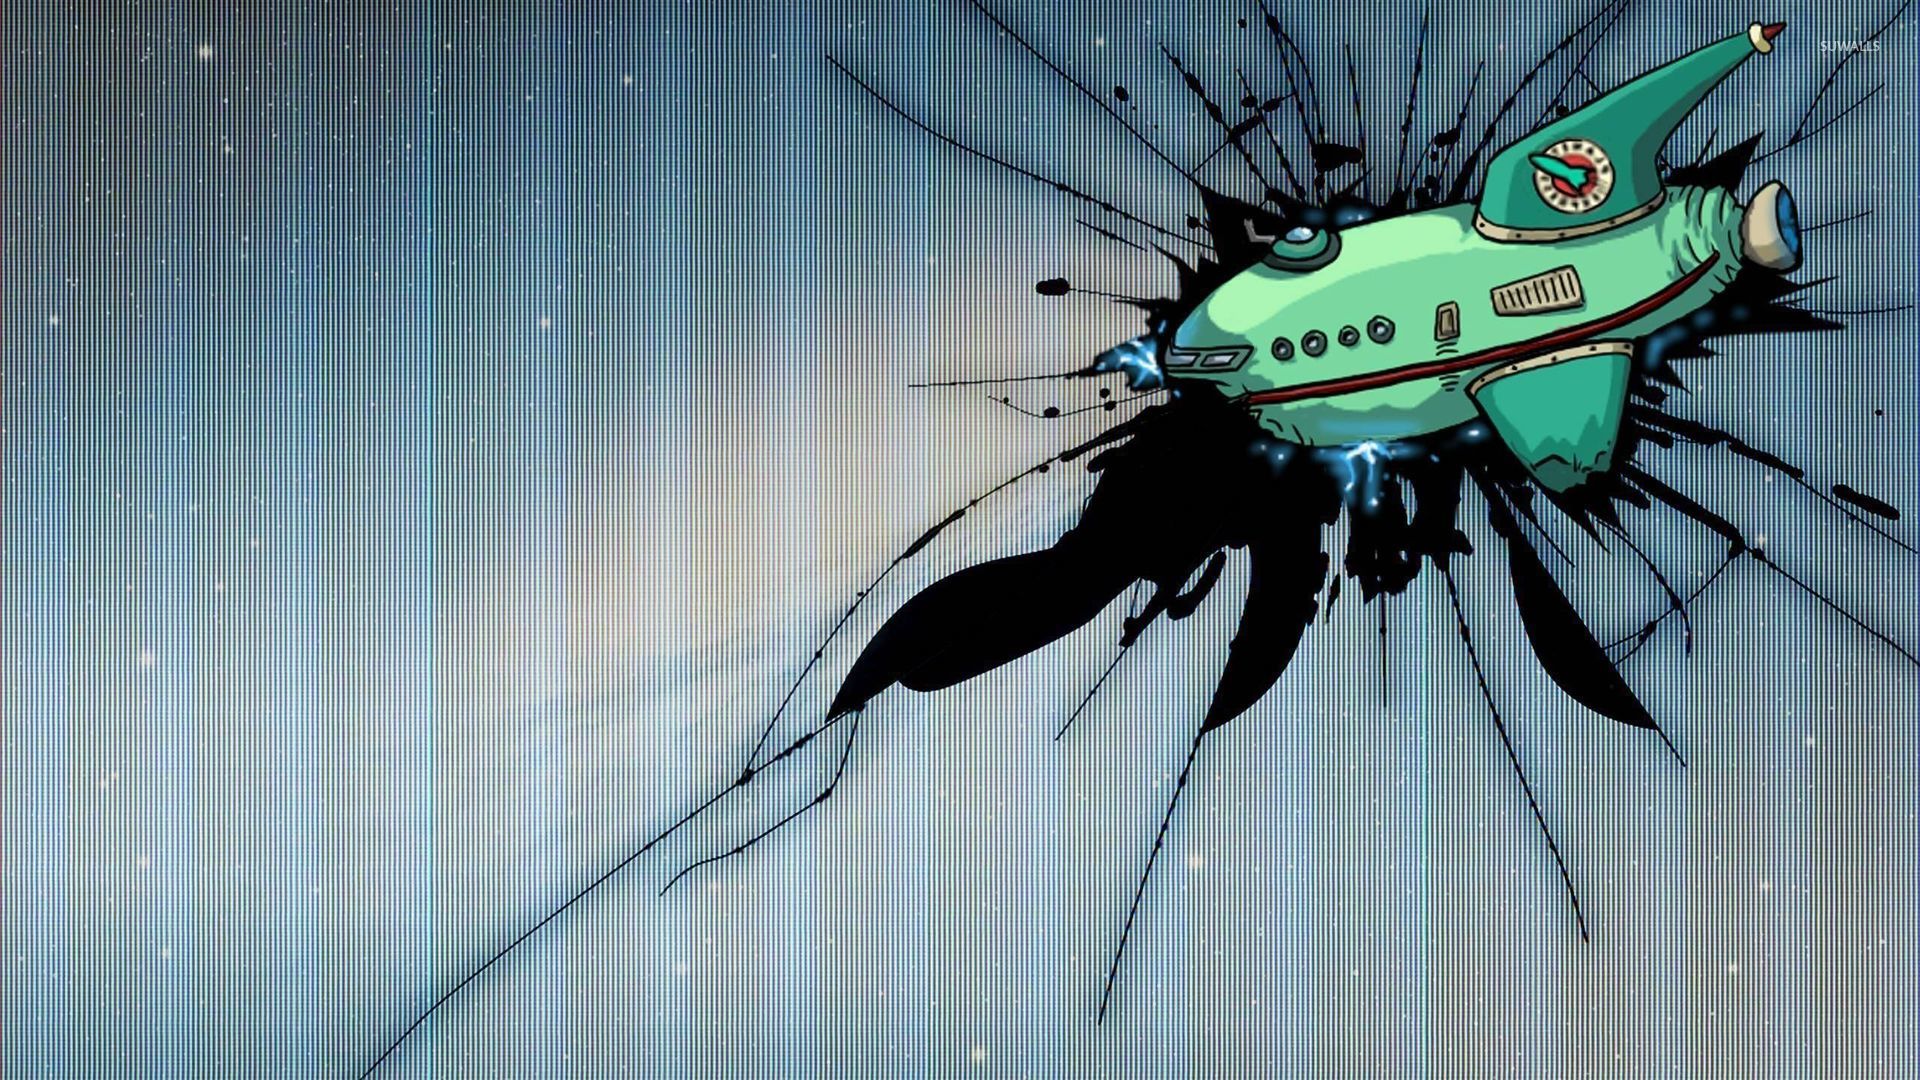 Planet Express ship   Futurama wallpaper   Cartoon wallpapers   27355